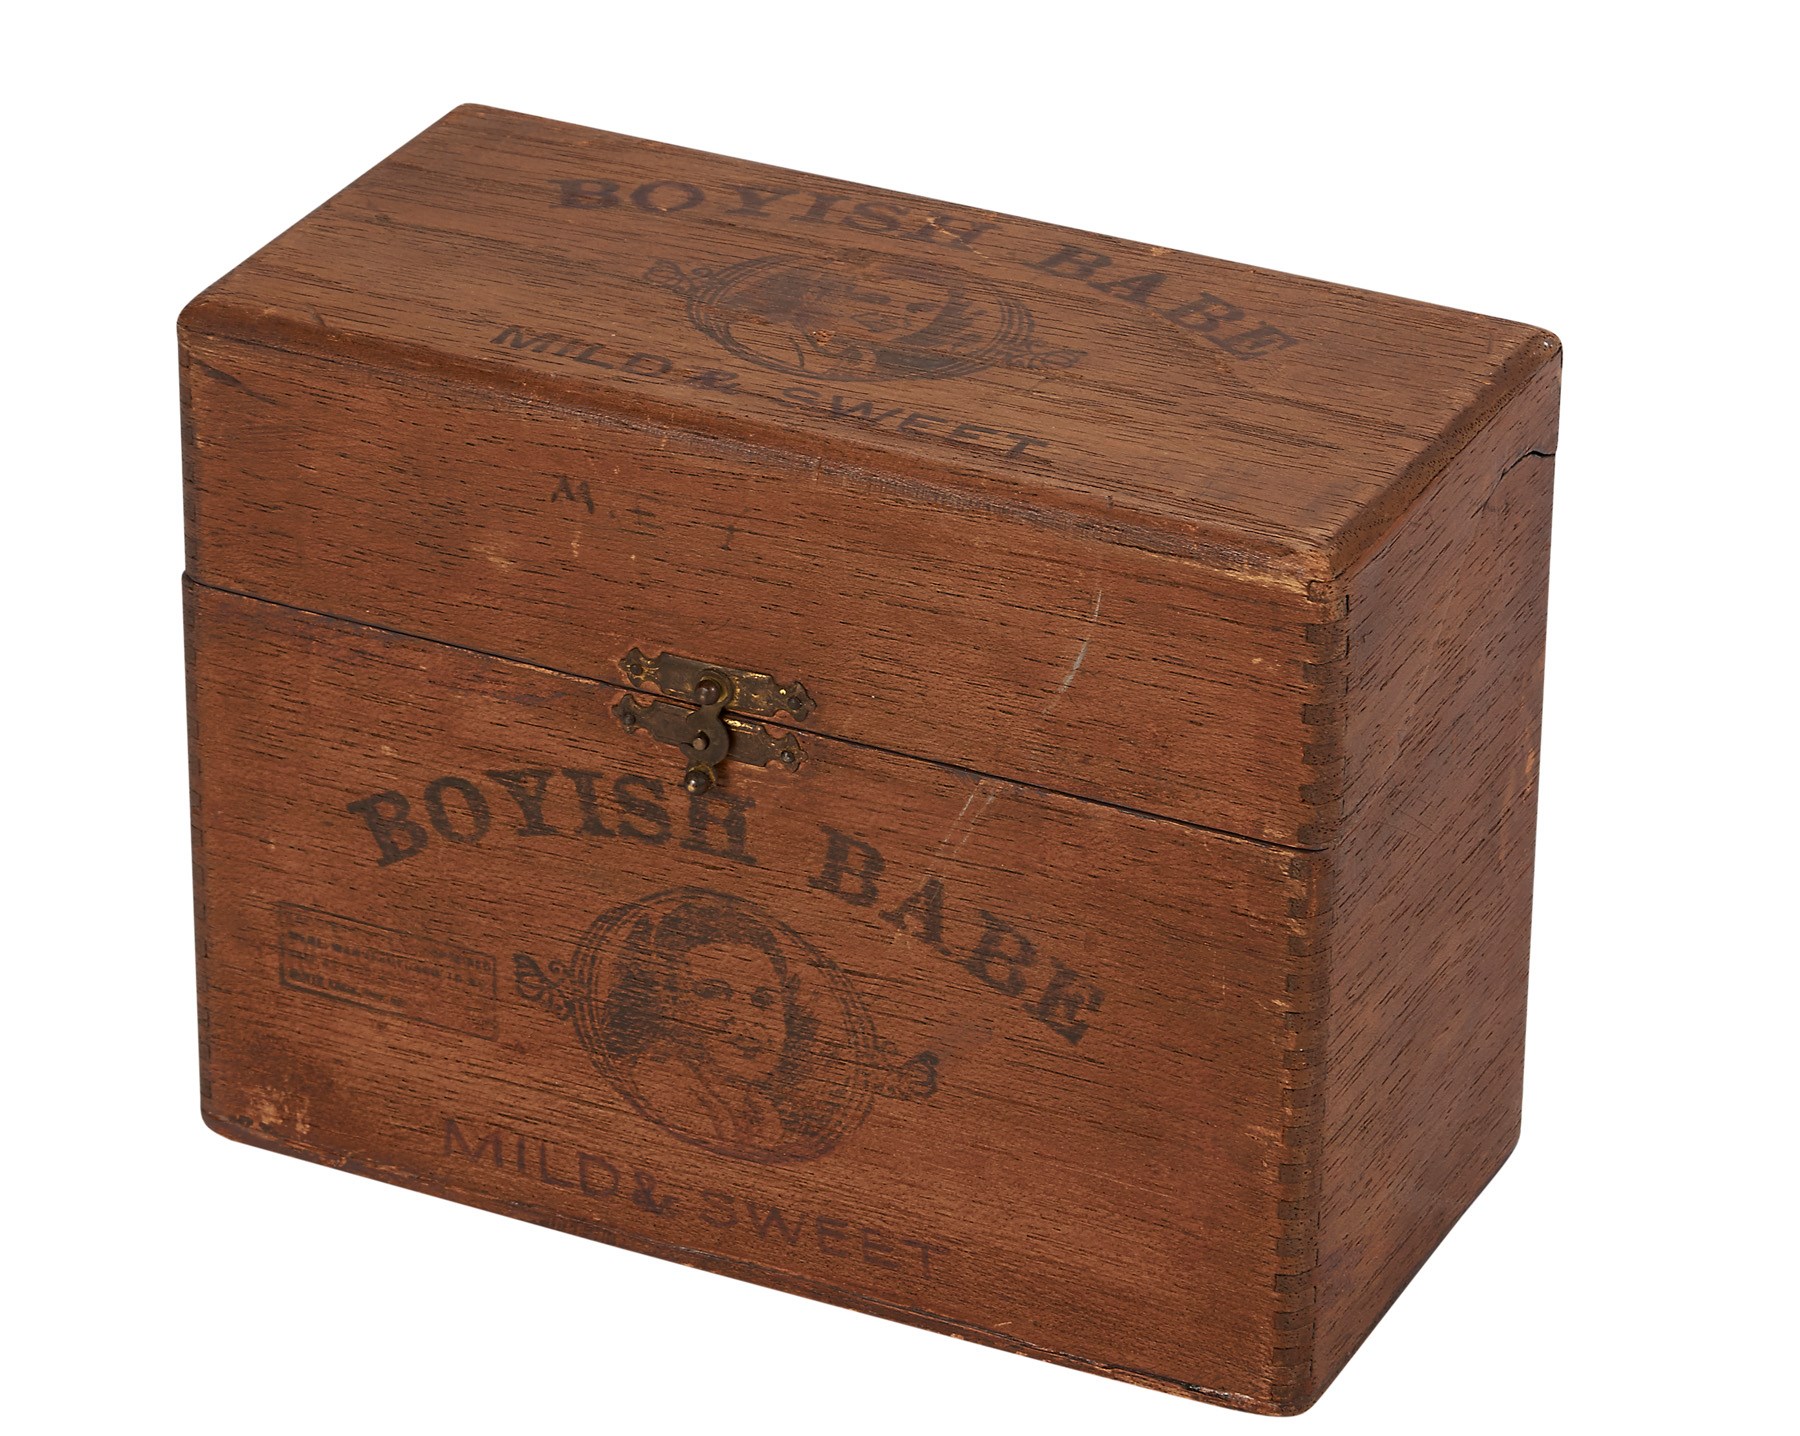 Internet Only - 1920s "Boyish Babe" Babe Ruth Cigar Box